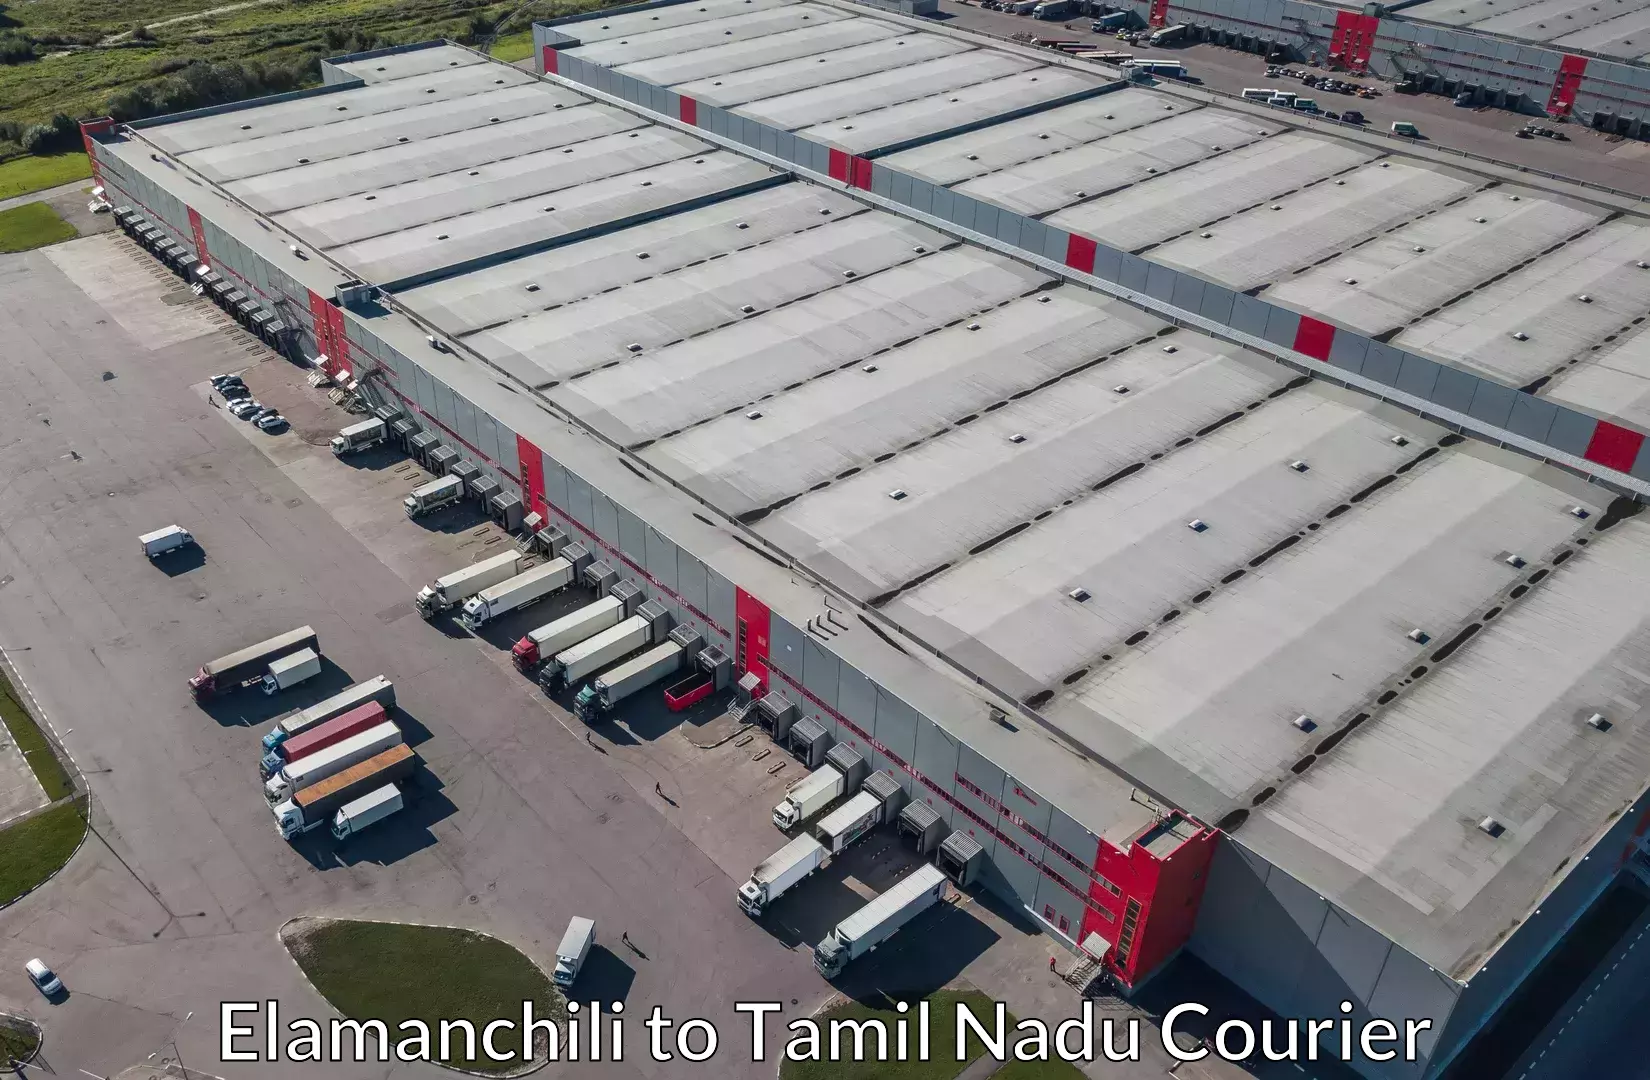 Furniture moving specialists Elamanchili to Chennai Port